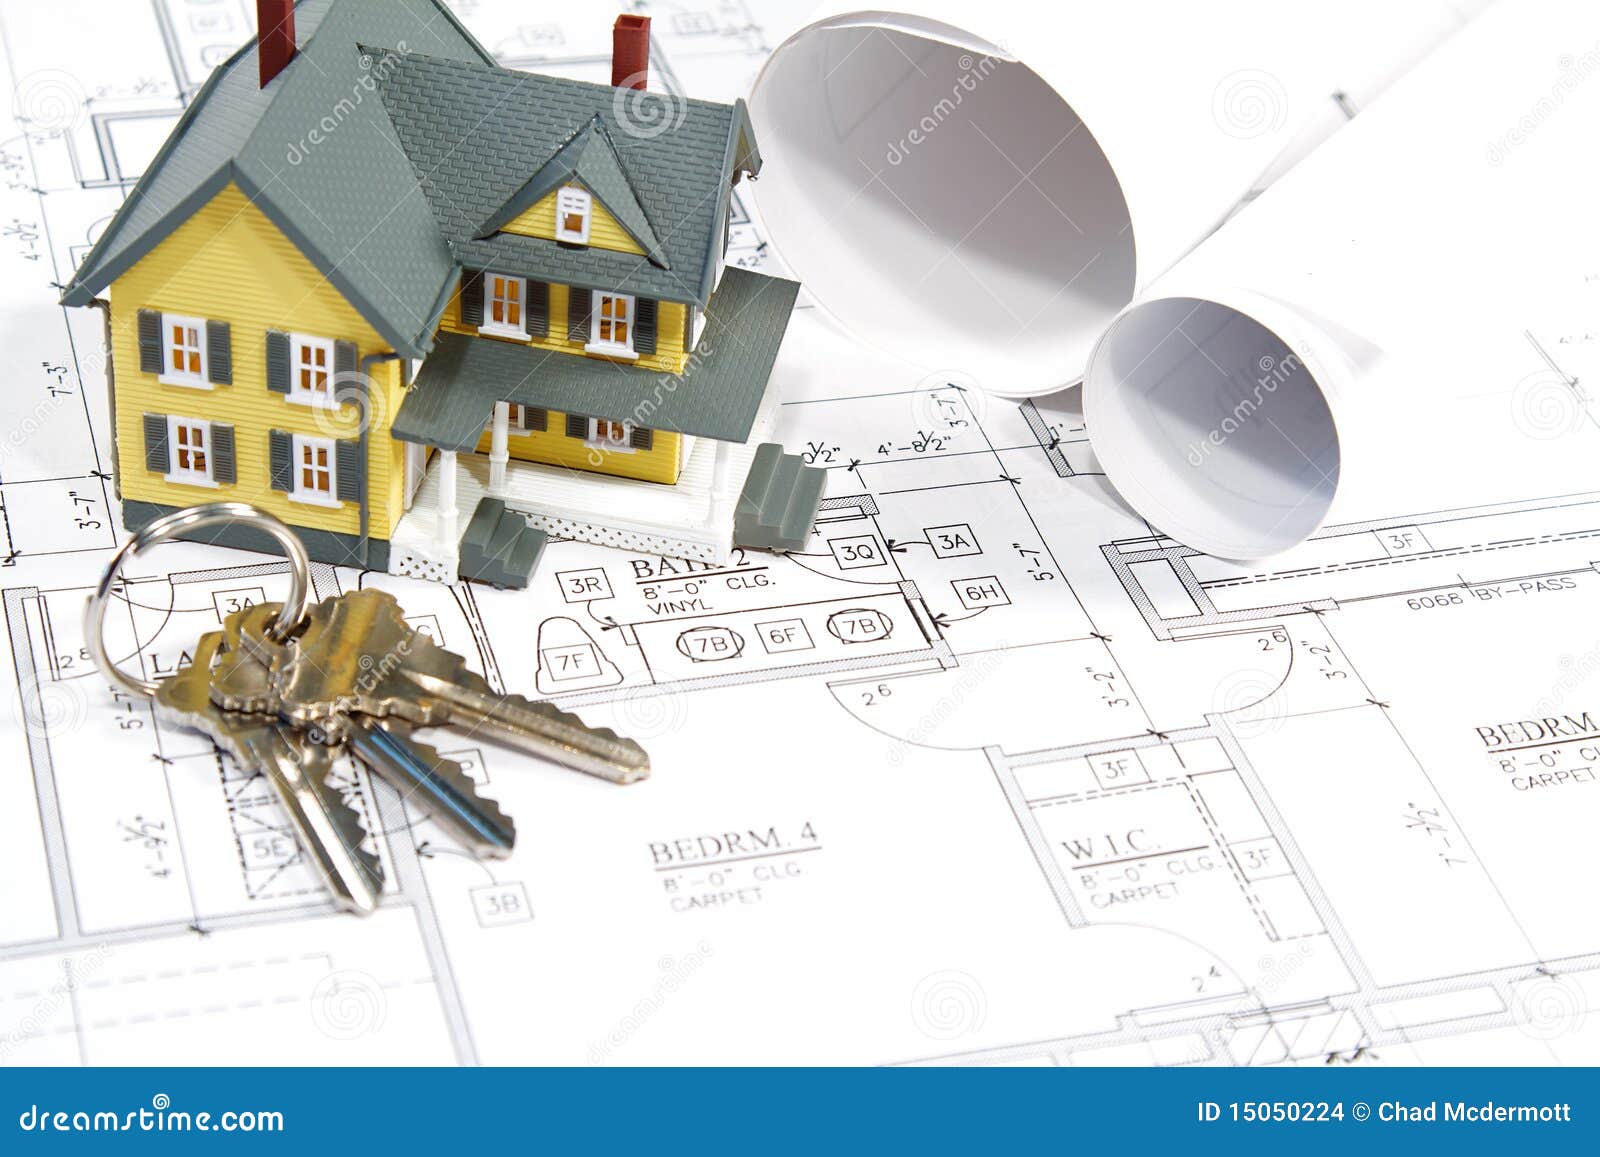 House Blueprints stock photo. Image of improvement, rolled - 15050224